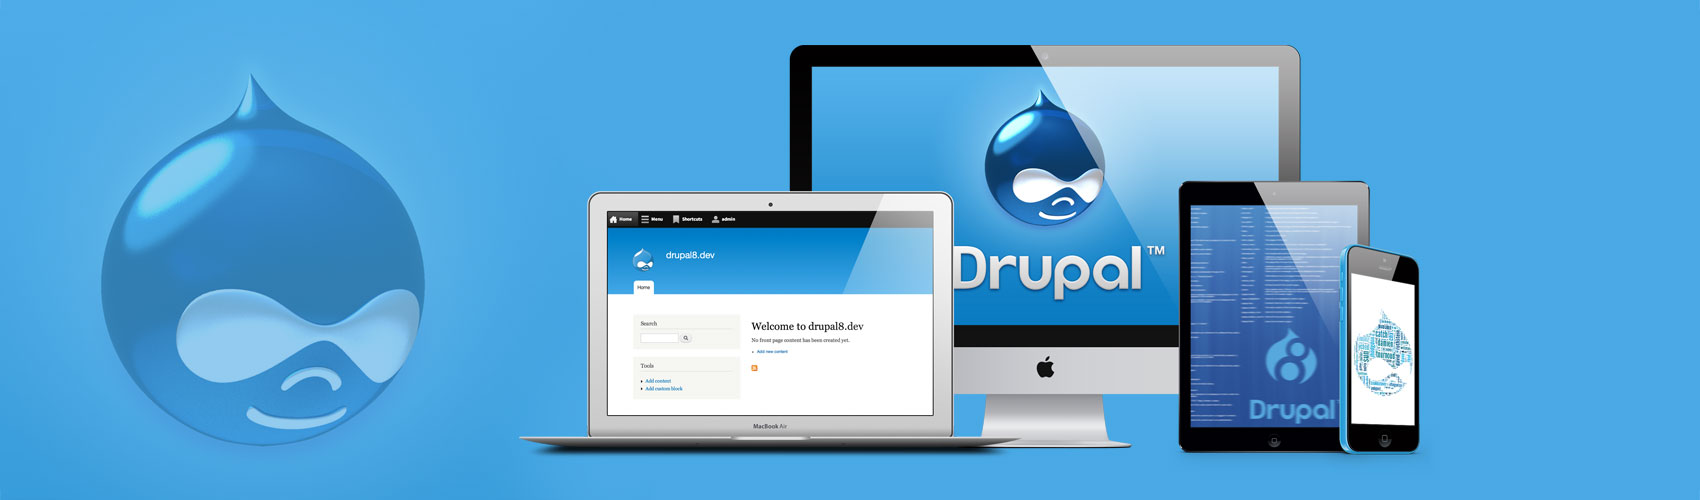 drupal web development company template